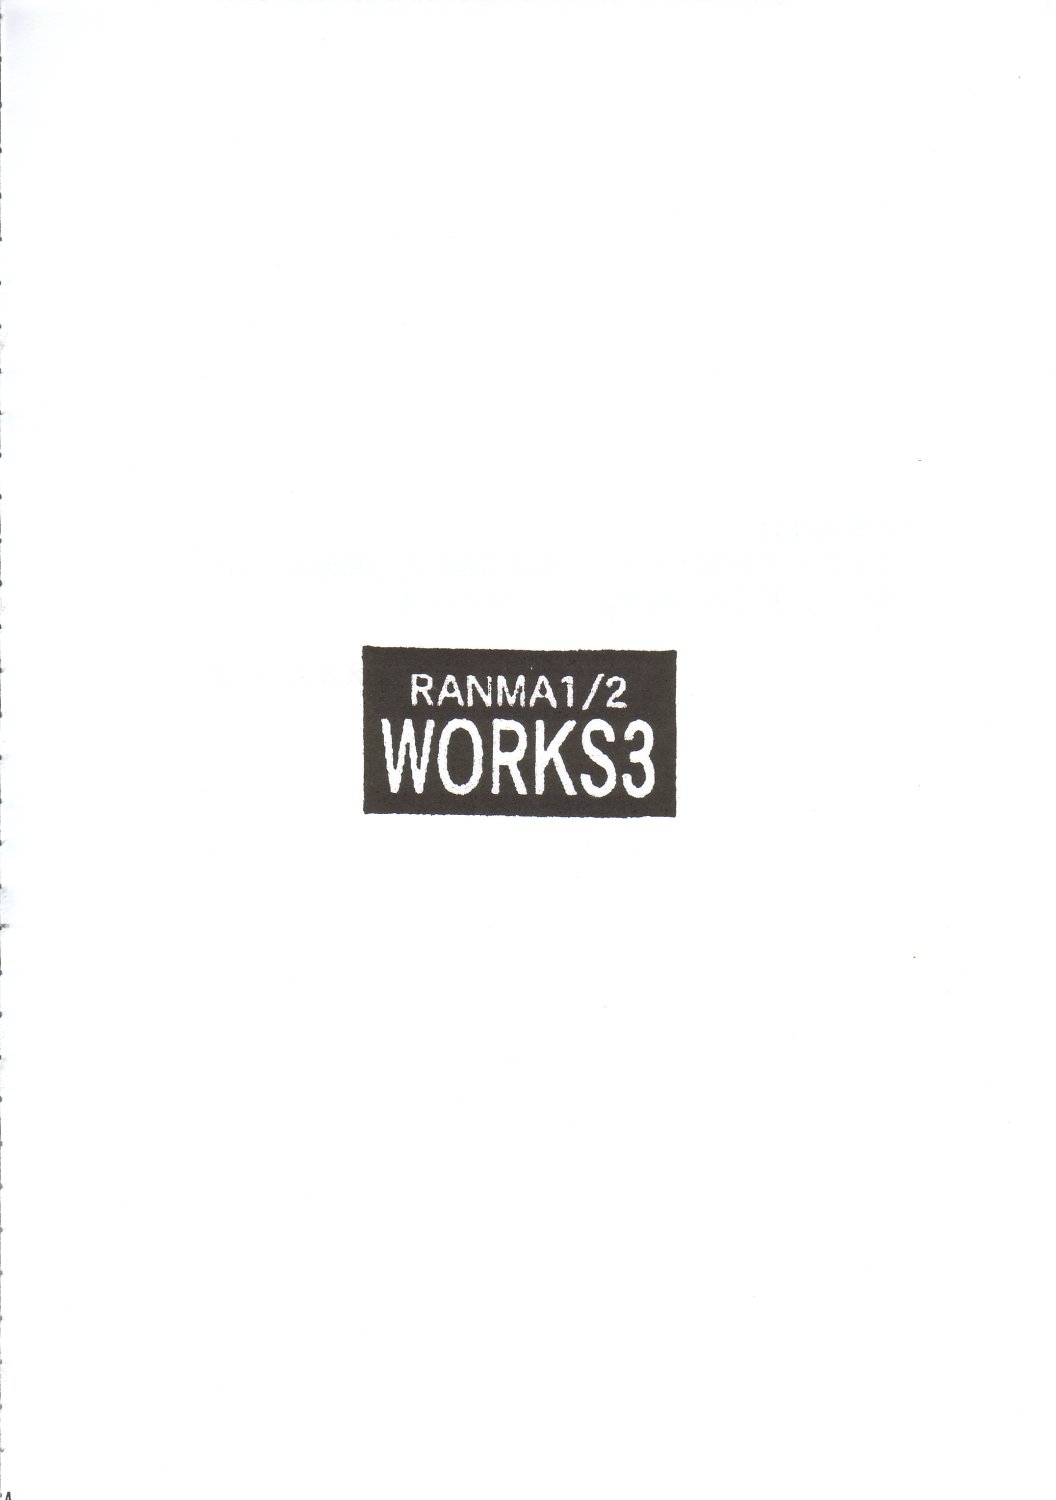 [Kimigabuchi] Works 3 (ranma) 